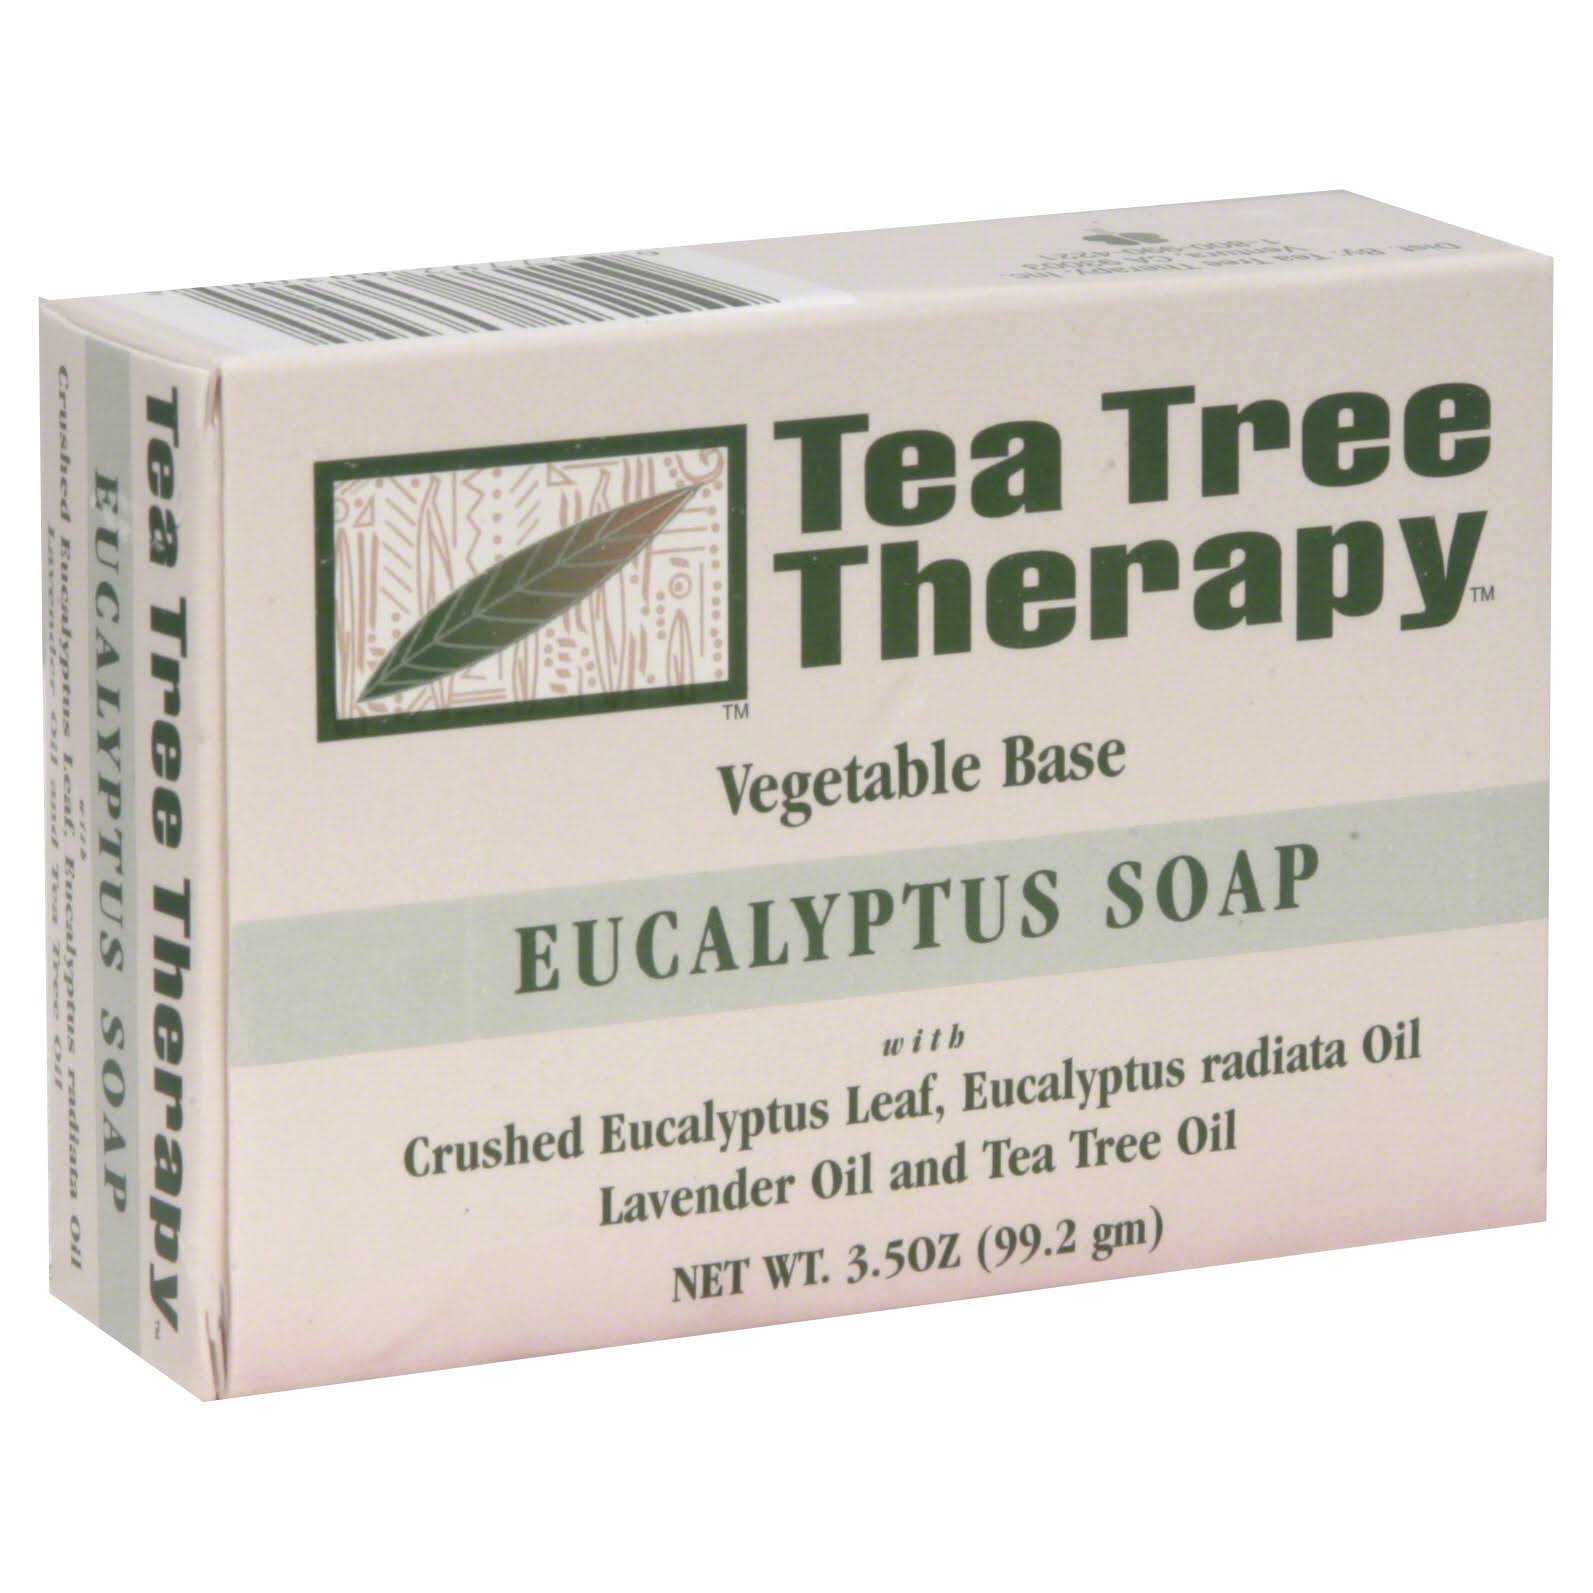 Tea Tree Therapy Eucalyptus Soap